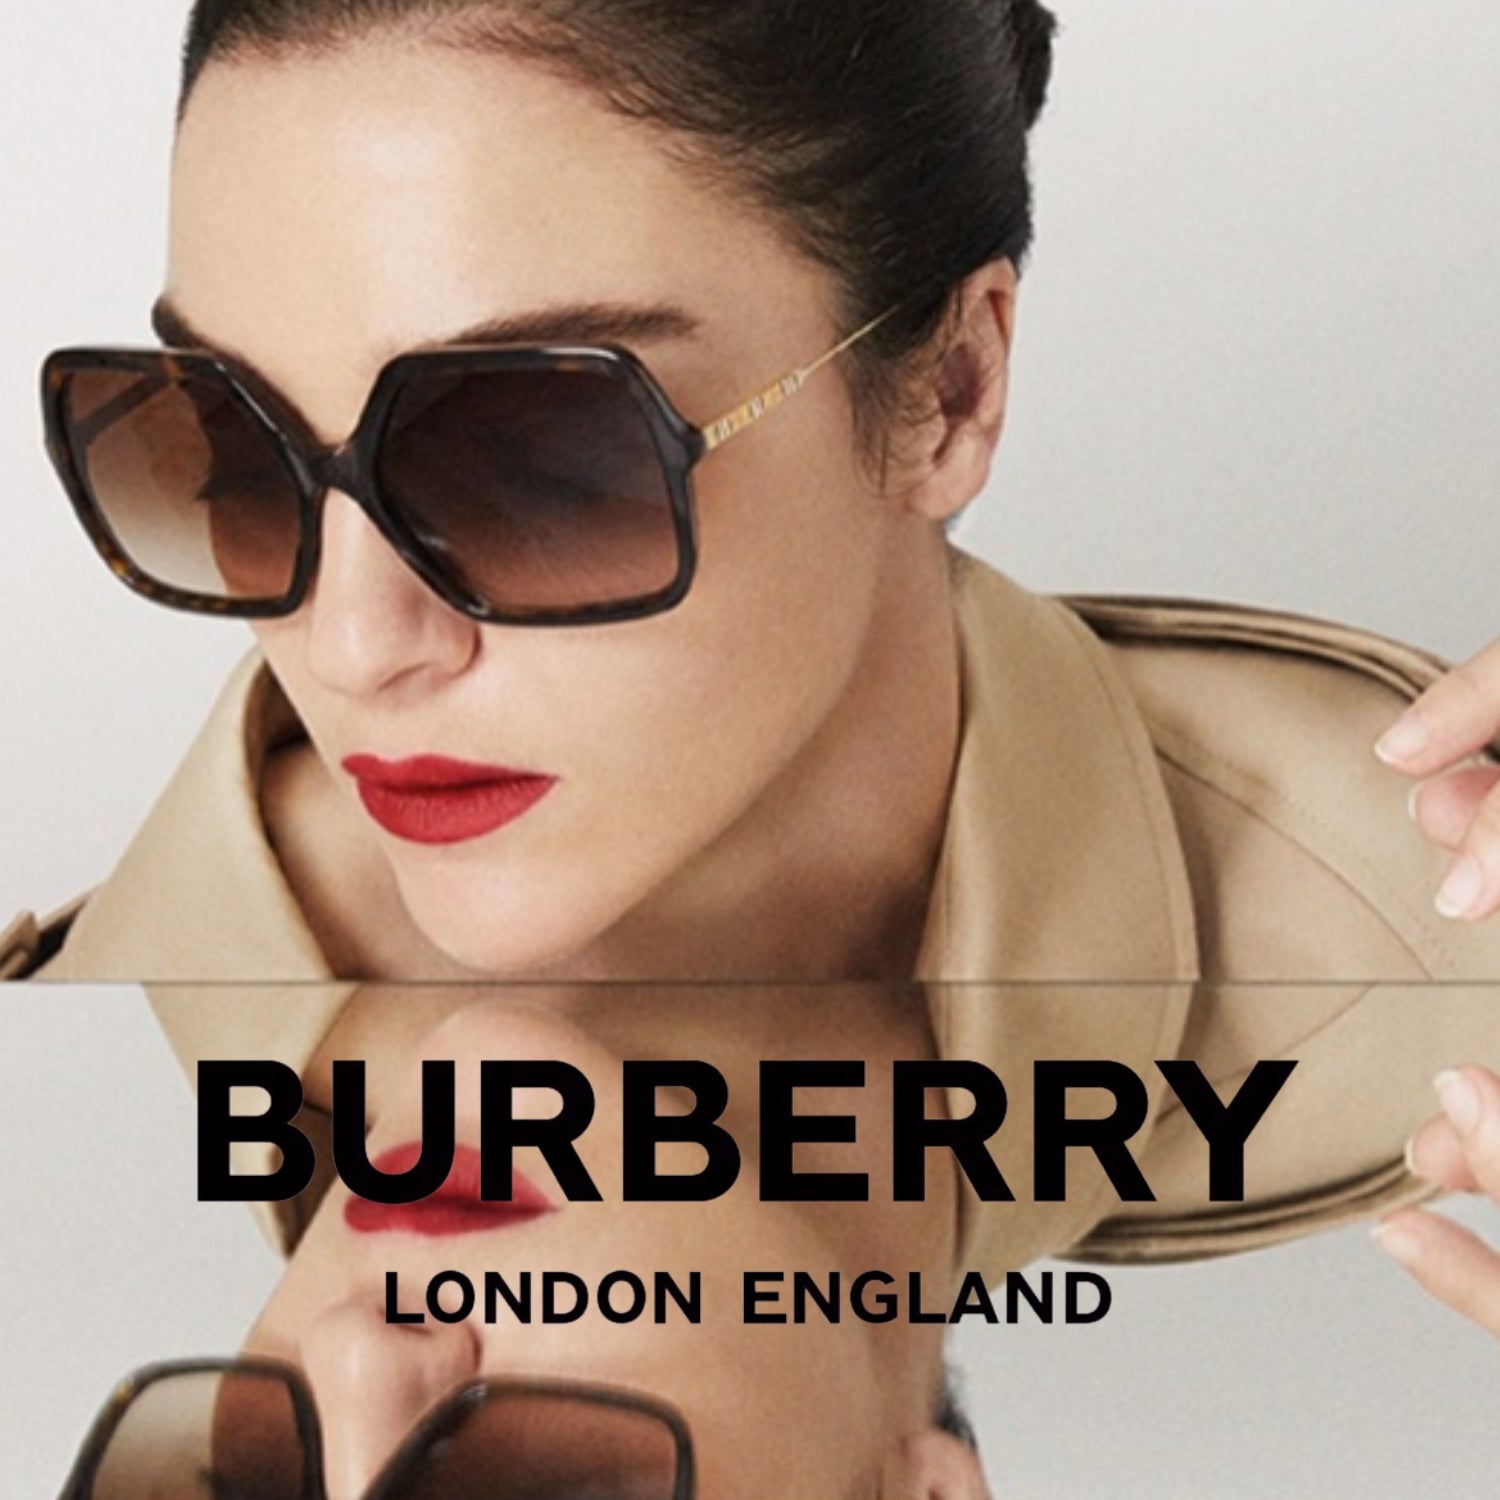 "A stylish woman & women wearing Burberry London England sunglasses, showcasing the brand's luxury and premium quality."